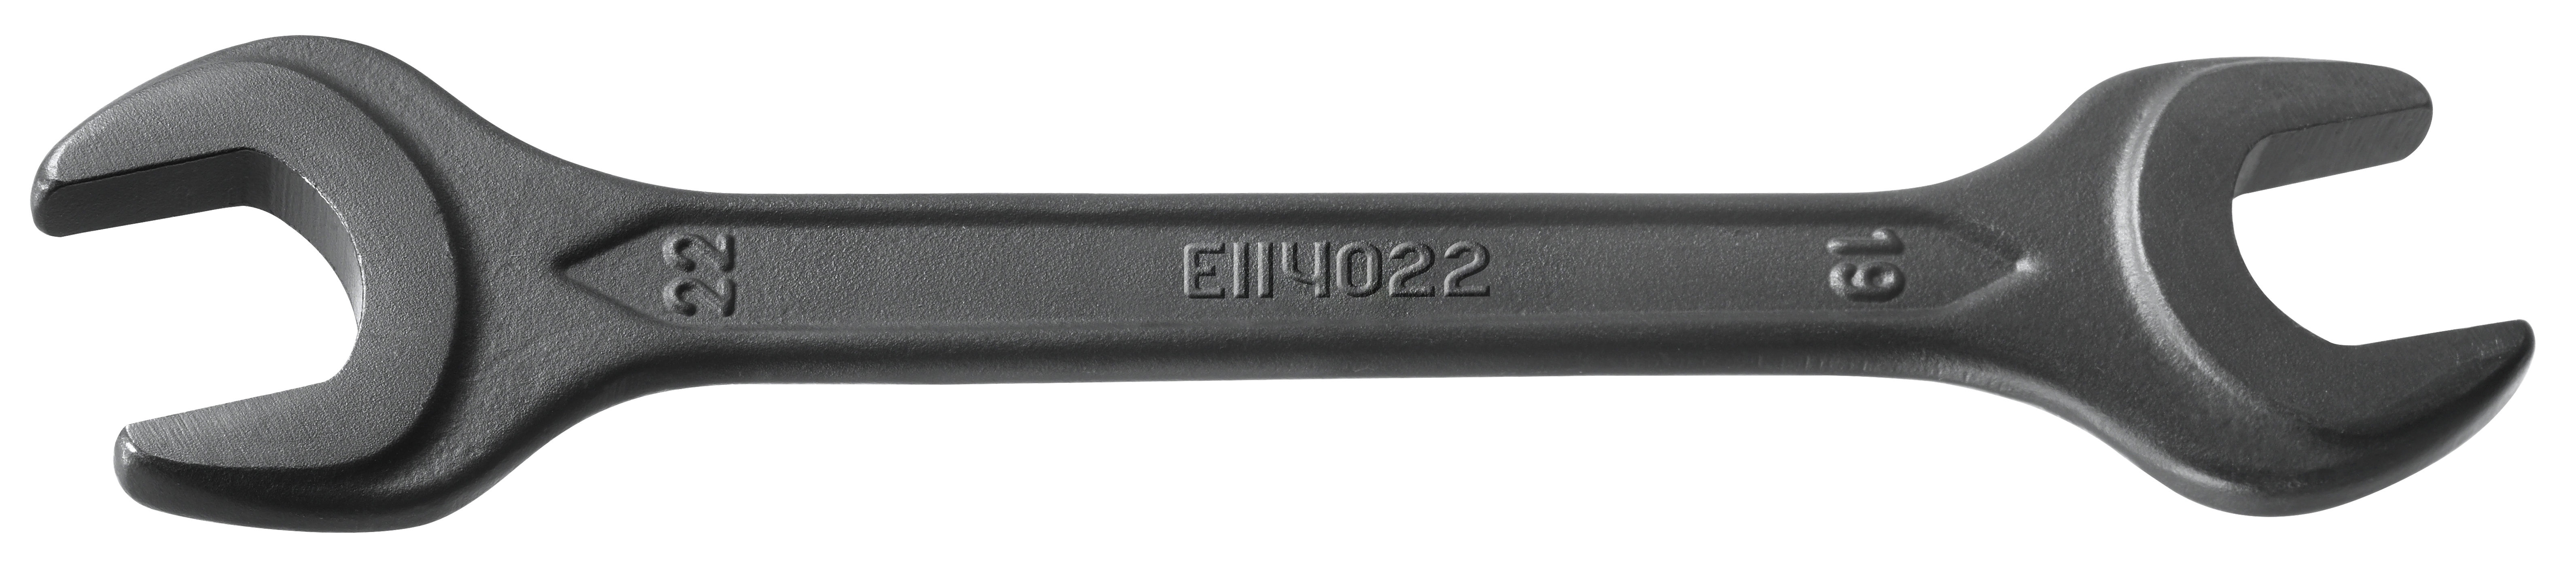 1.E114029 Impact steeksleutel din 30x34 mm